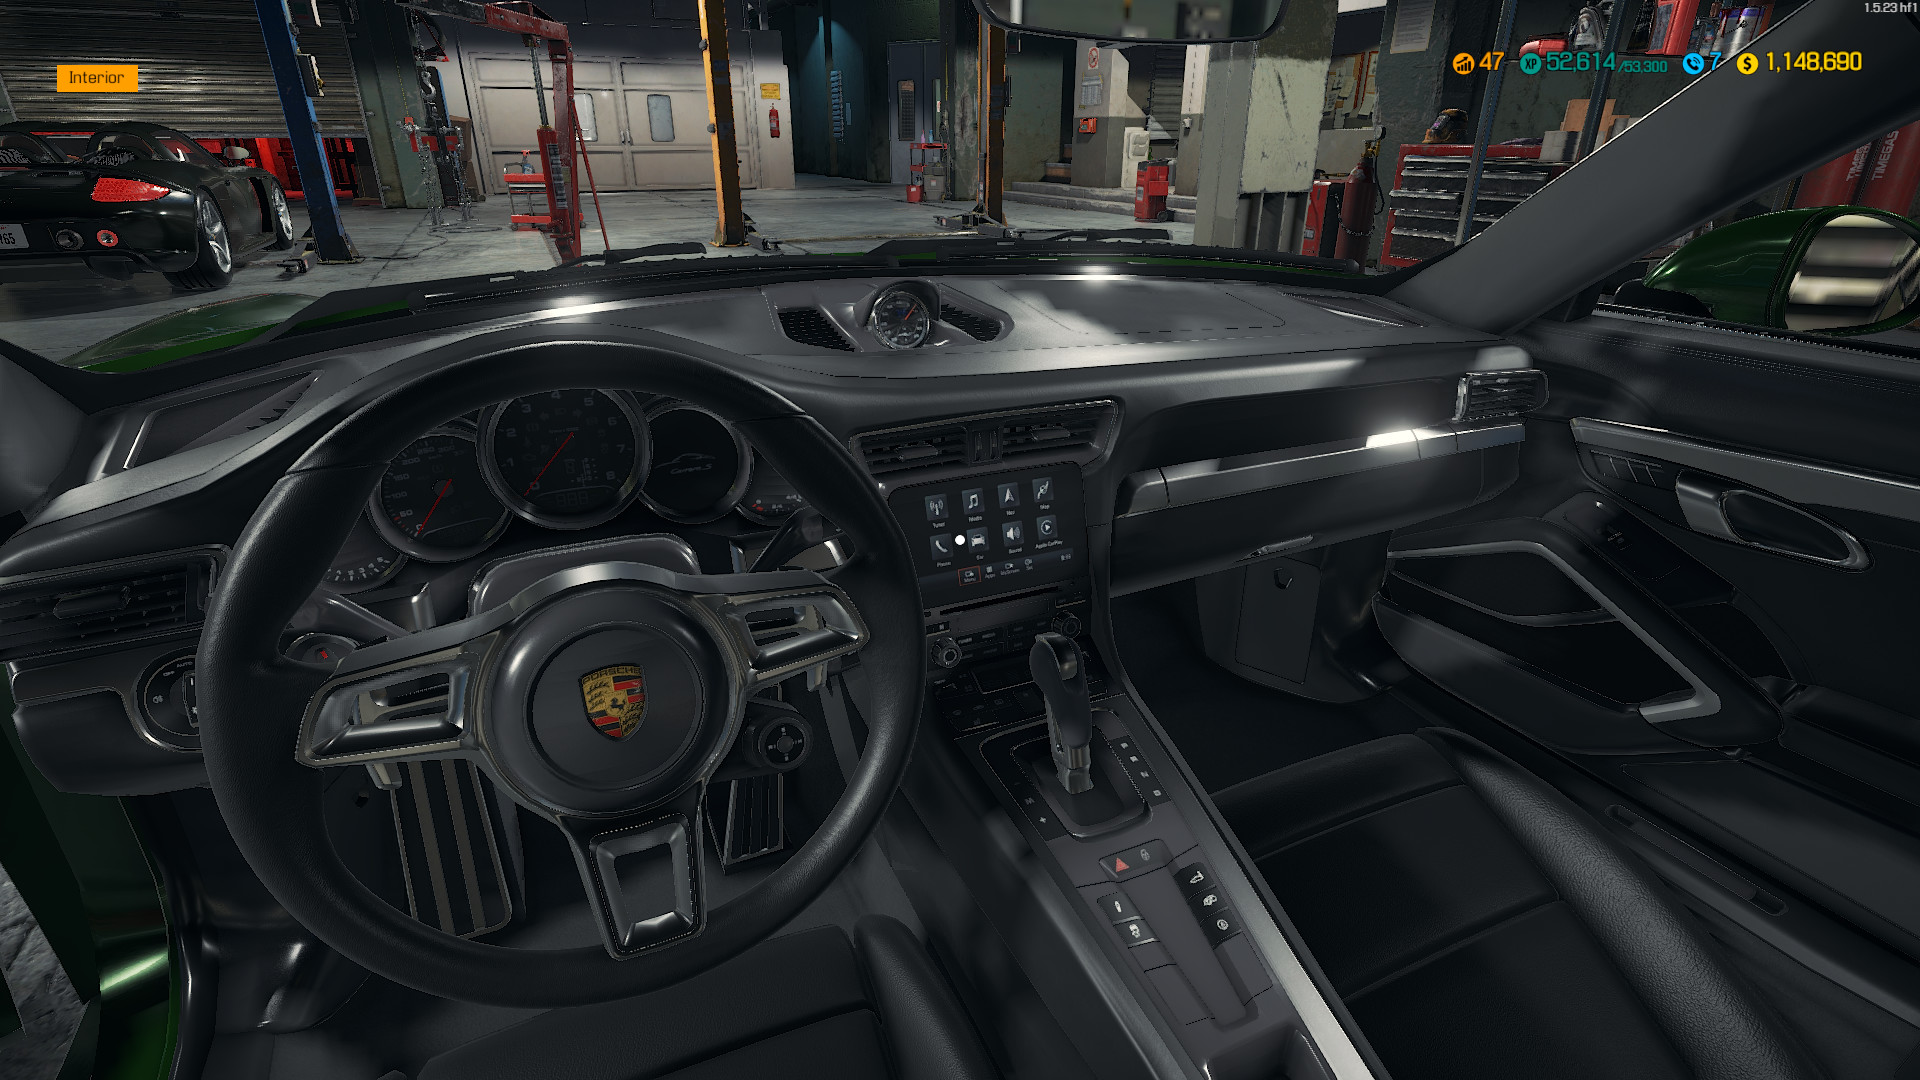 Save 77% on Car Mechanic Simulator 2018 - Porsche DLC on Steam